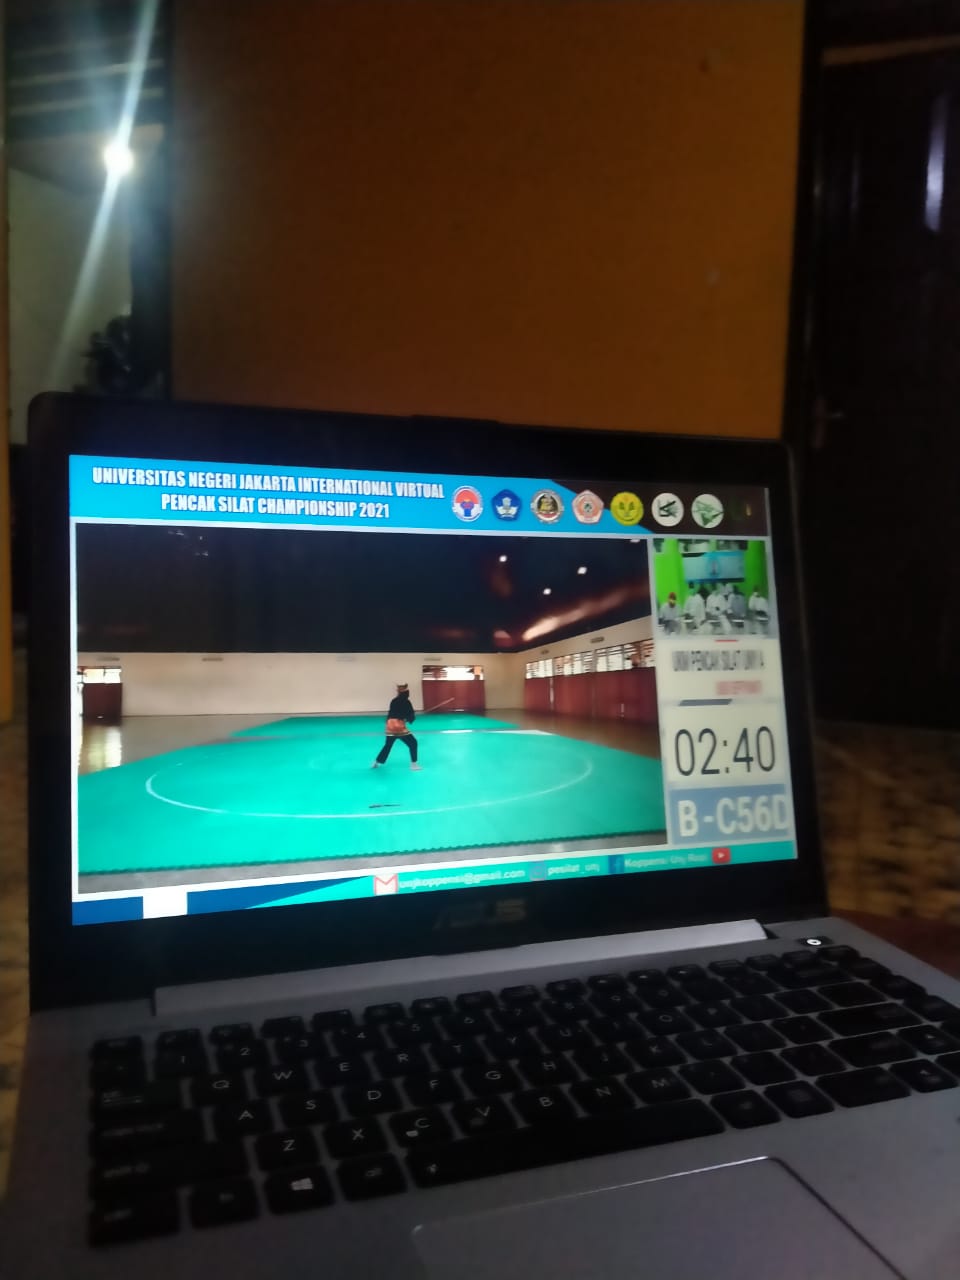 Foto Kejuaraan internasional Virtual Pencak Silat Universitas Negeri Jakarta 2021 